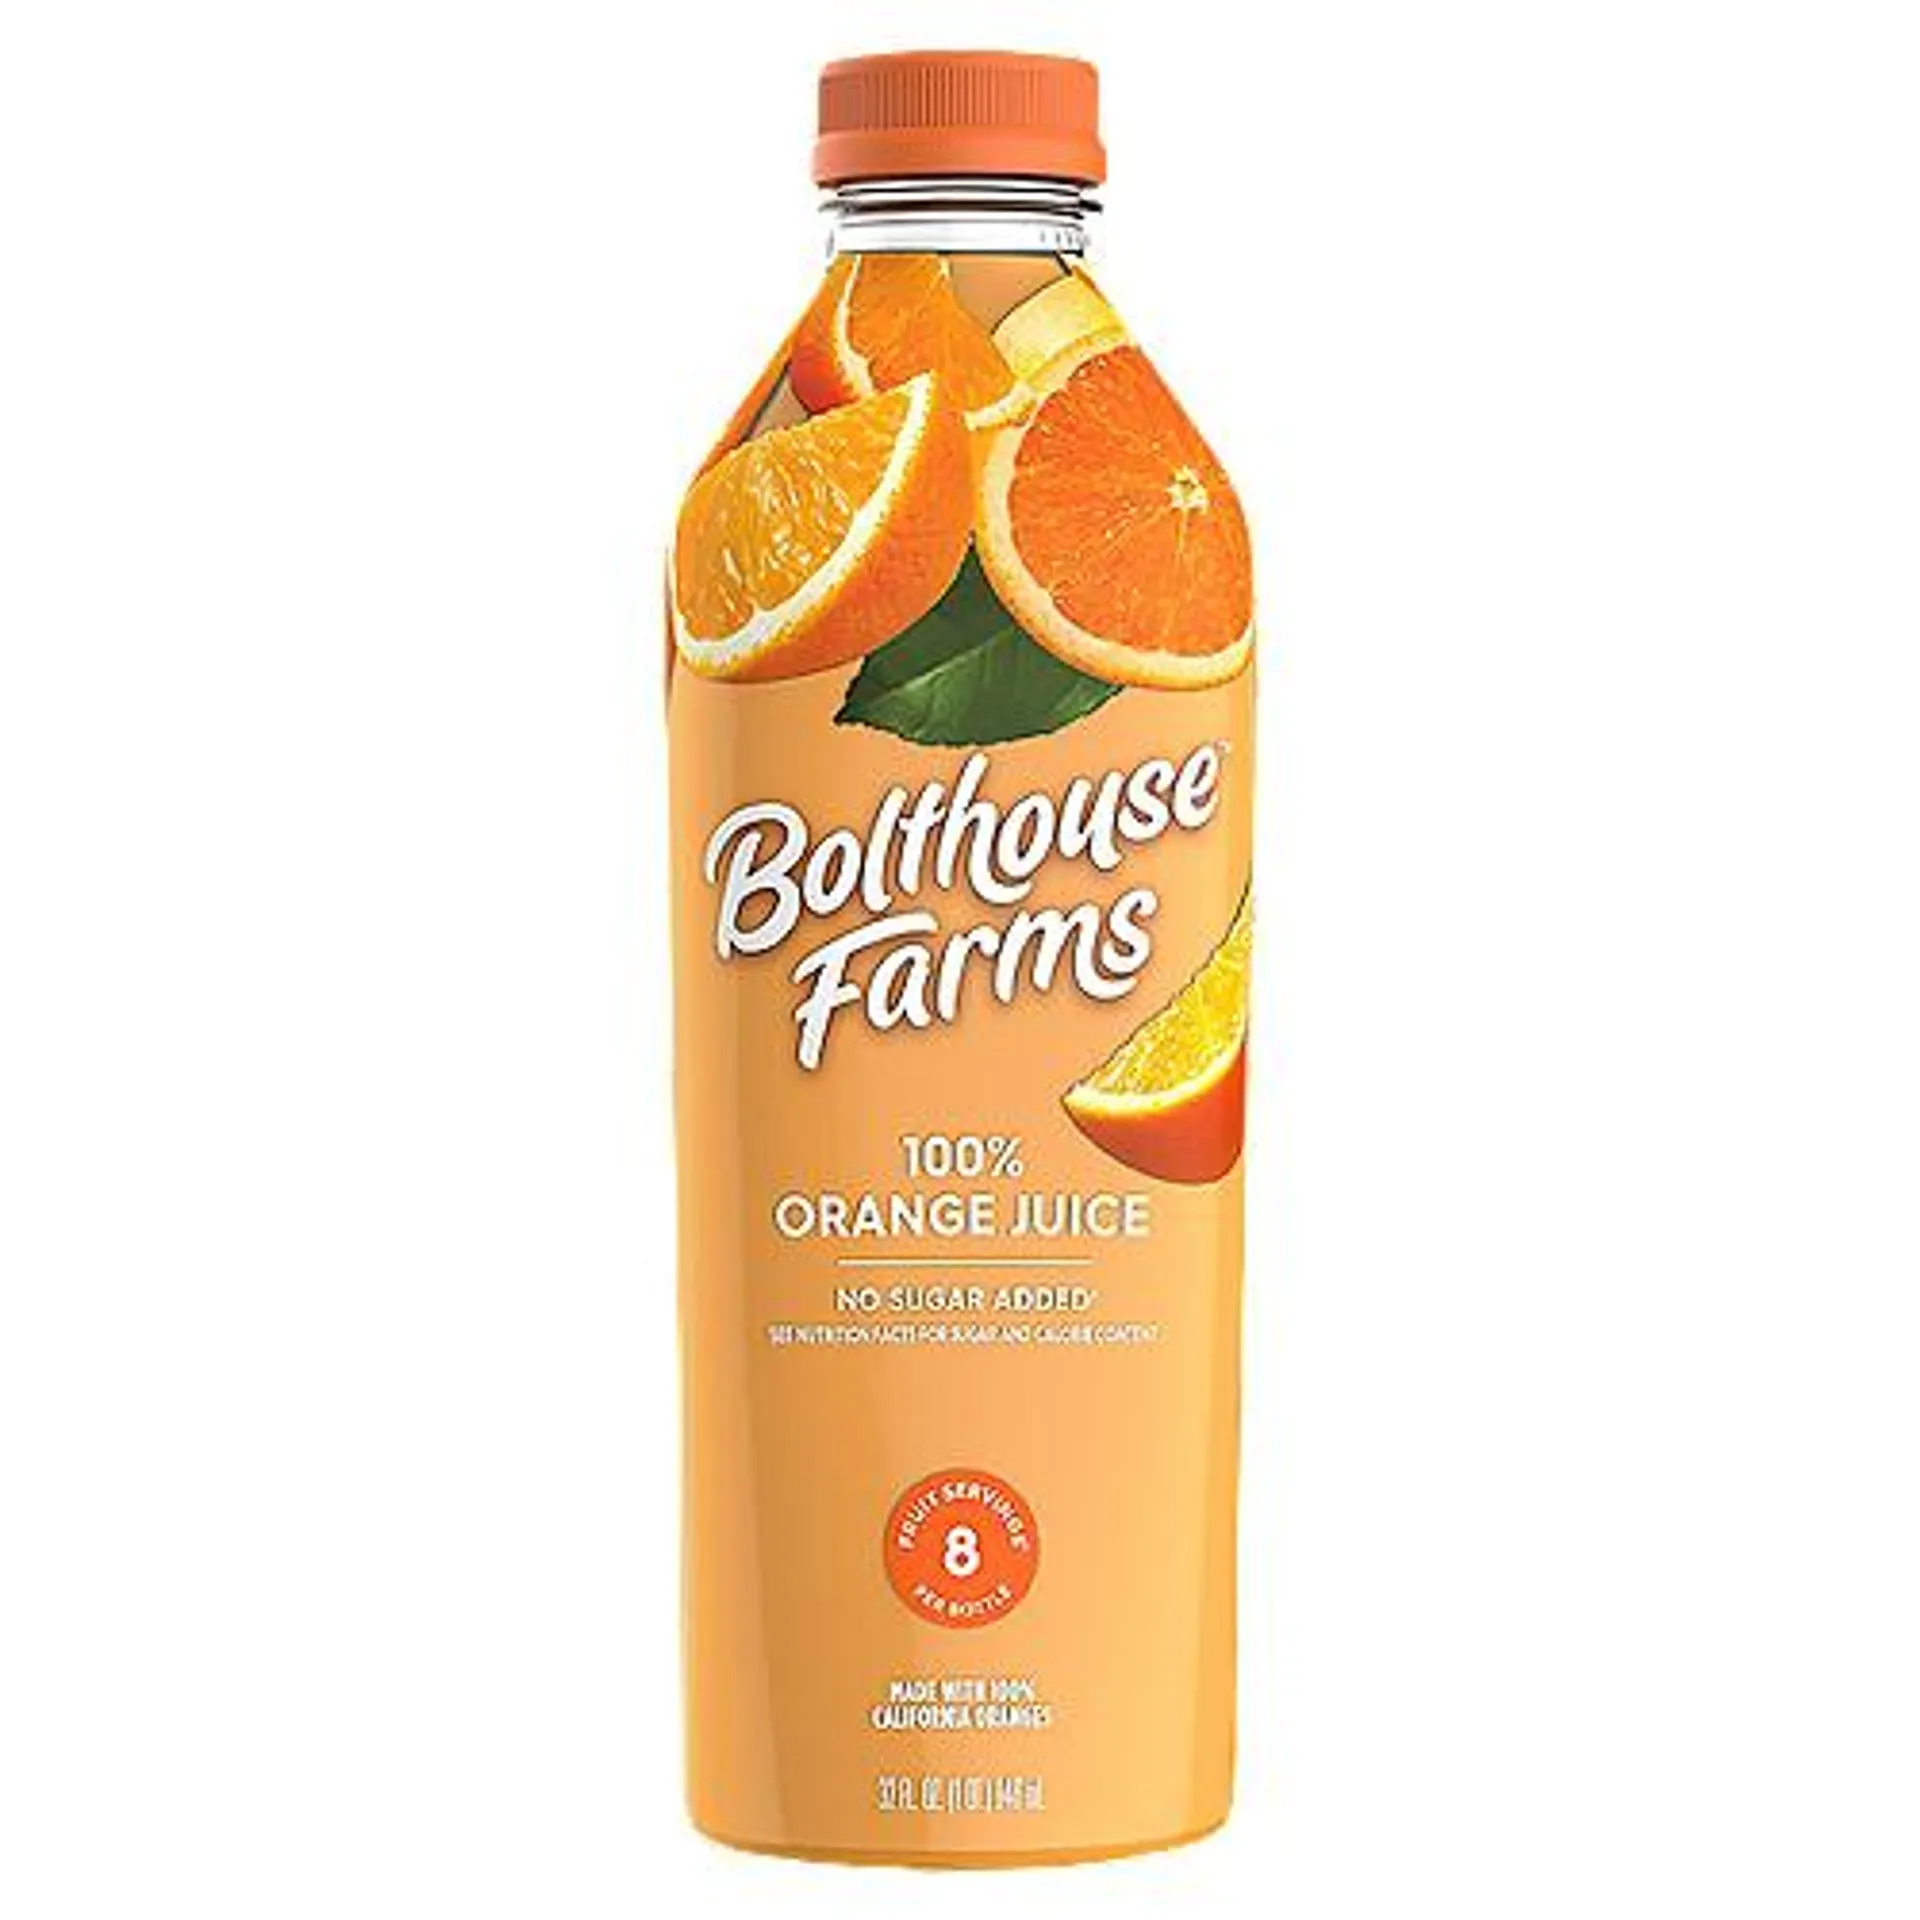 32oz Orange juice